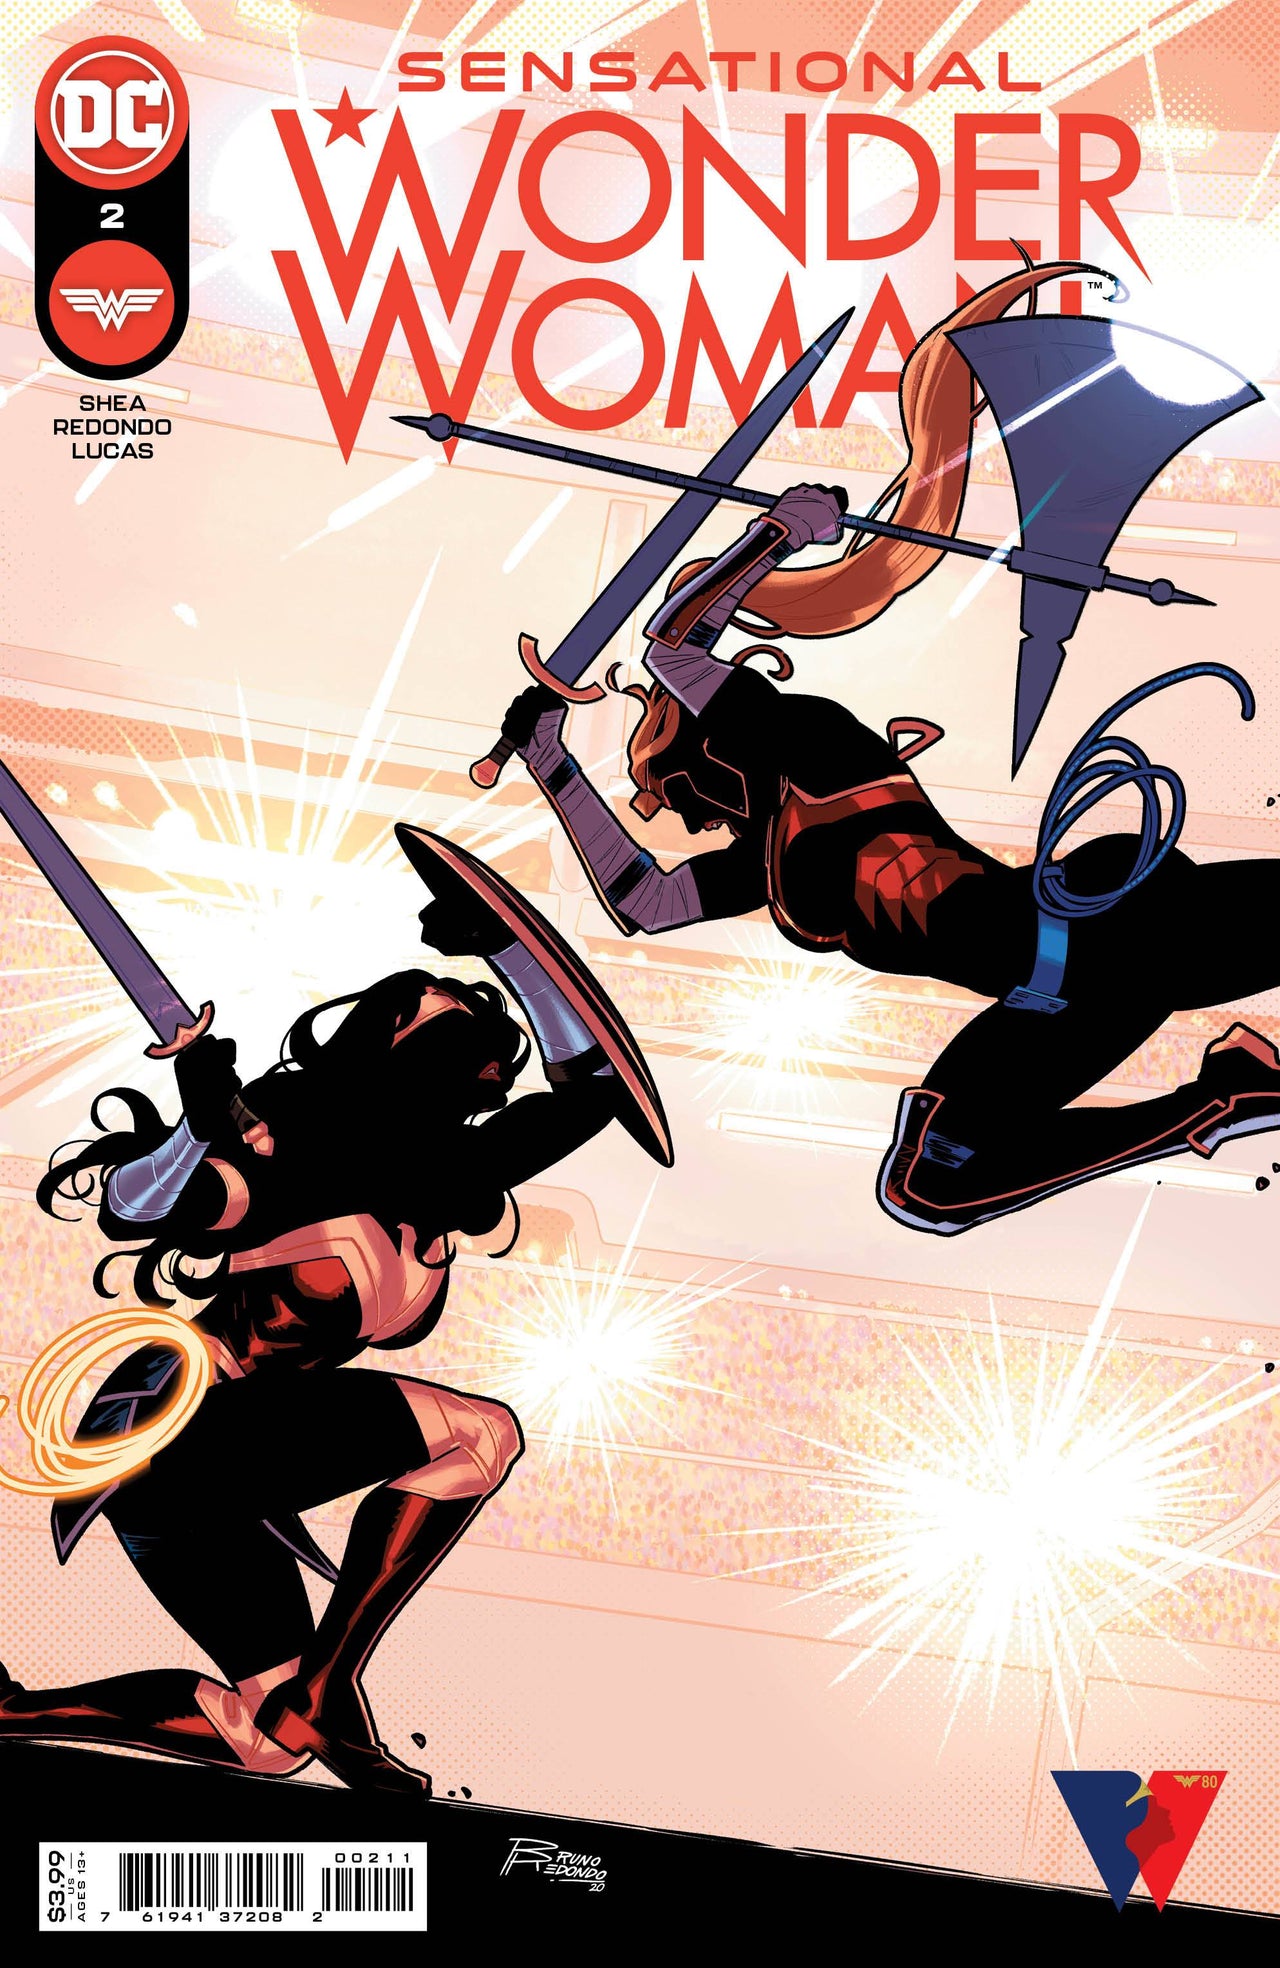 Sensational Wonder Woman Vol. 1 #2